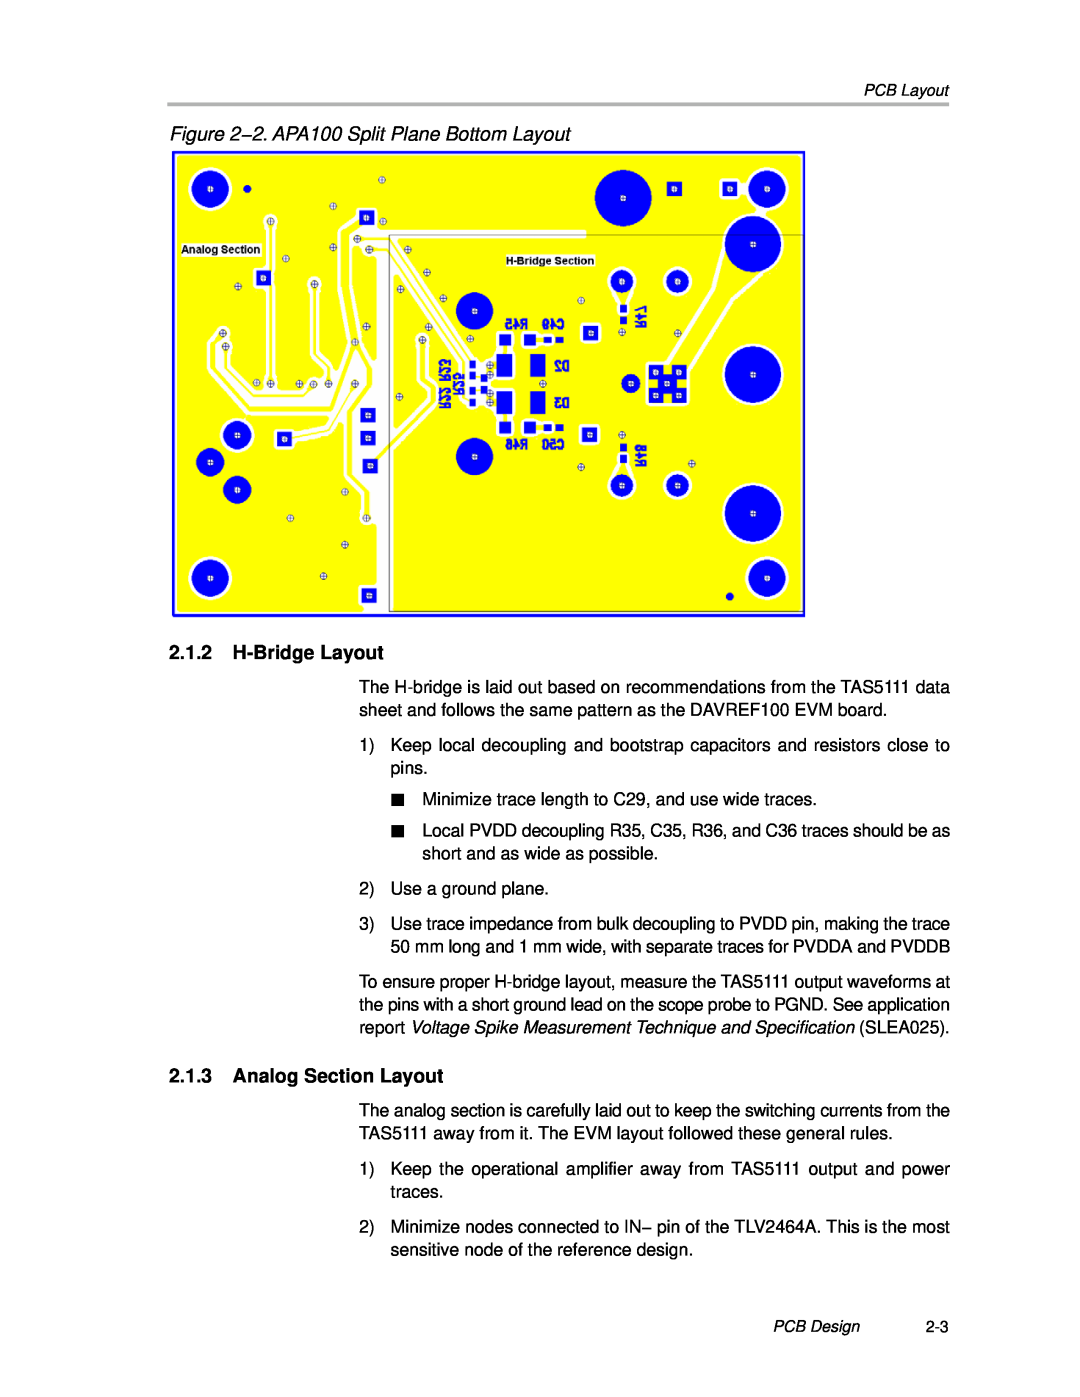 Texas Instruments manual 2.1.2H-BridgeLayout, 2.1.3Analog Section Layout, 2. APA100 Split Plane Bottom Layout 